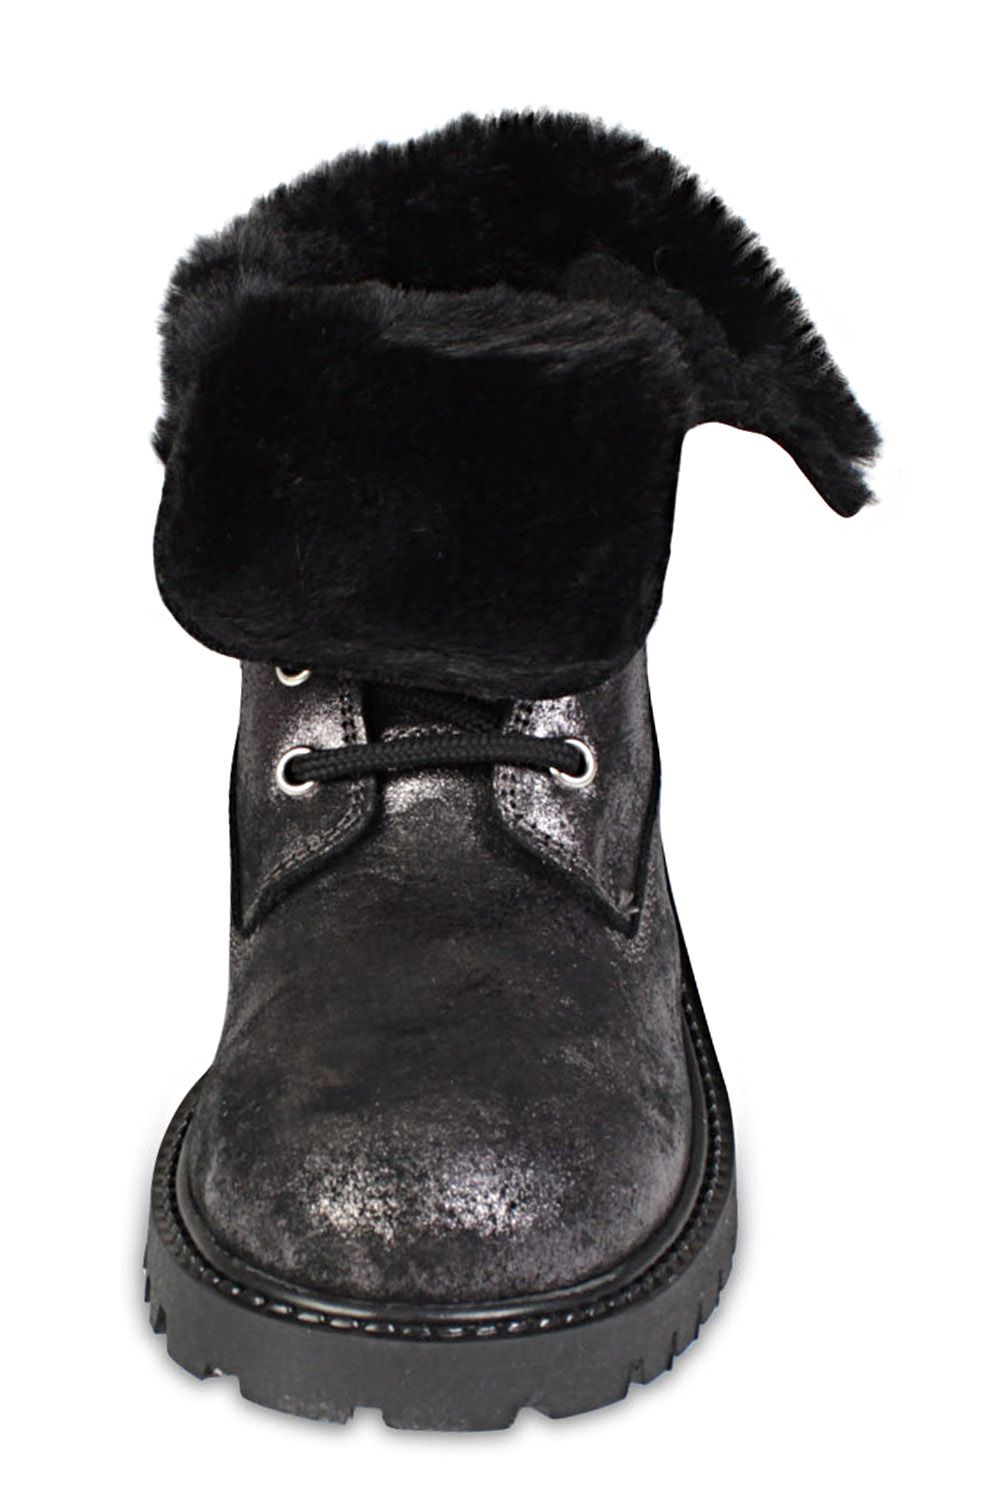 Ботинки Sho.e.b.76, размер 33, цвет серый 541AR2 - фото 5